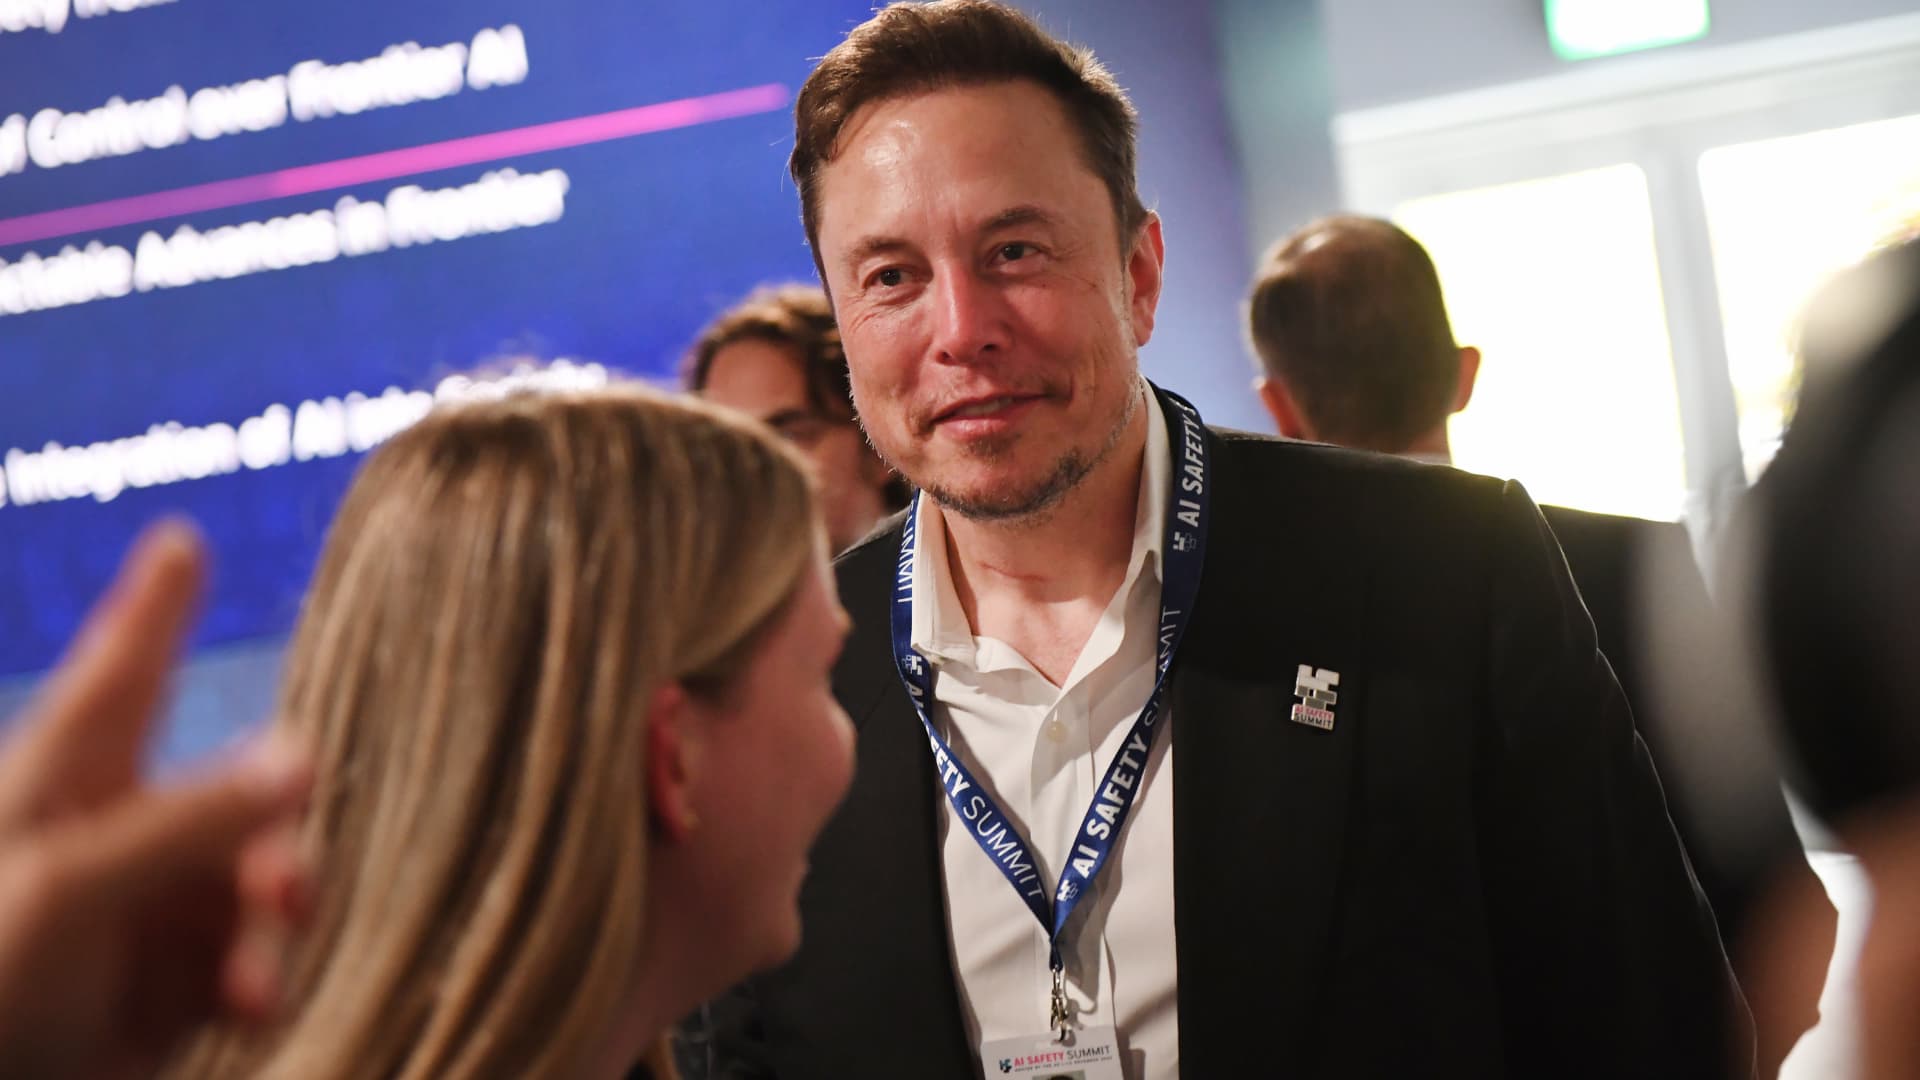 Tesla boss Elon Musk says AI will create situation where no job is needed